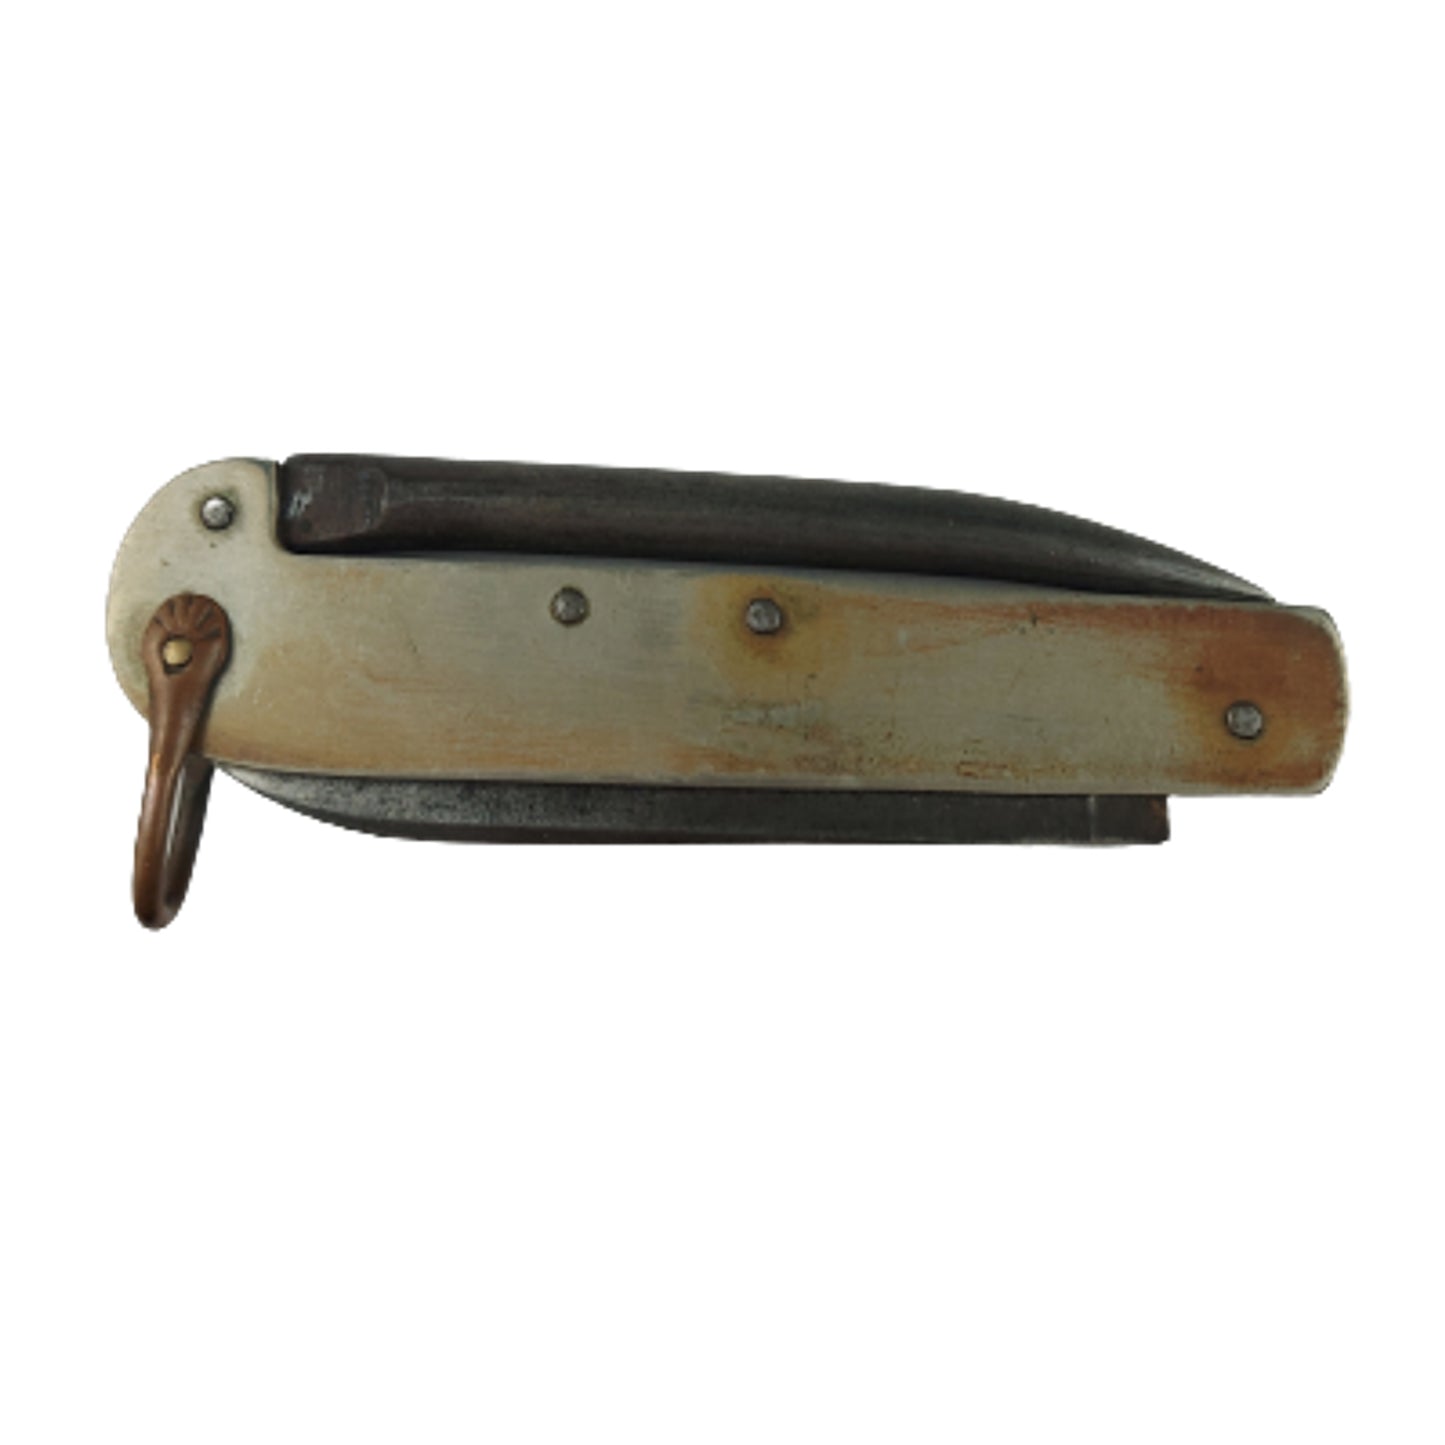 WW1 Canadian Marlin Spike Pocket Knife 1915